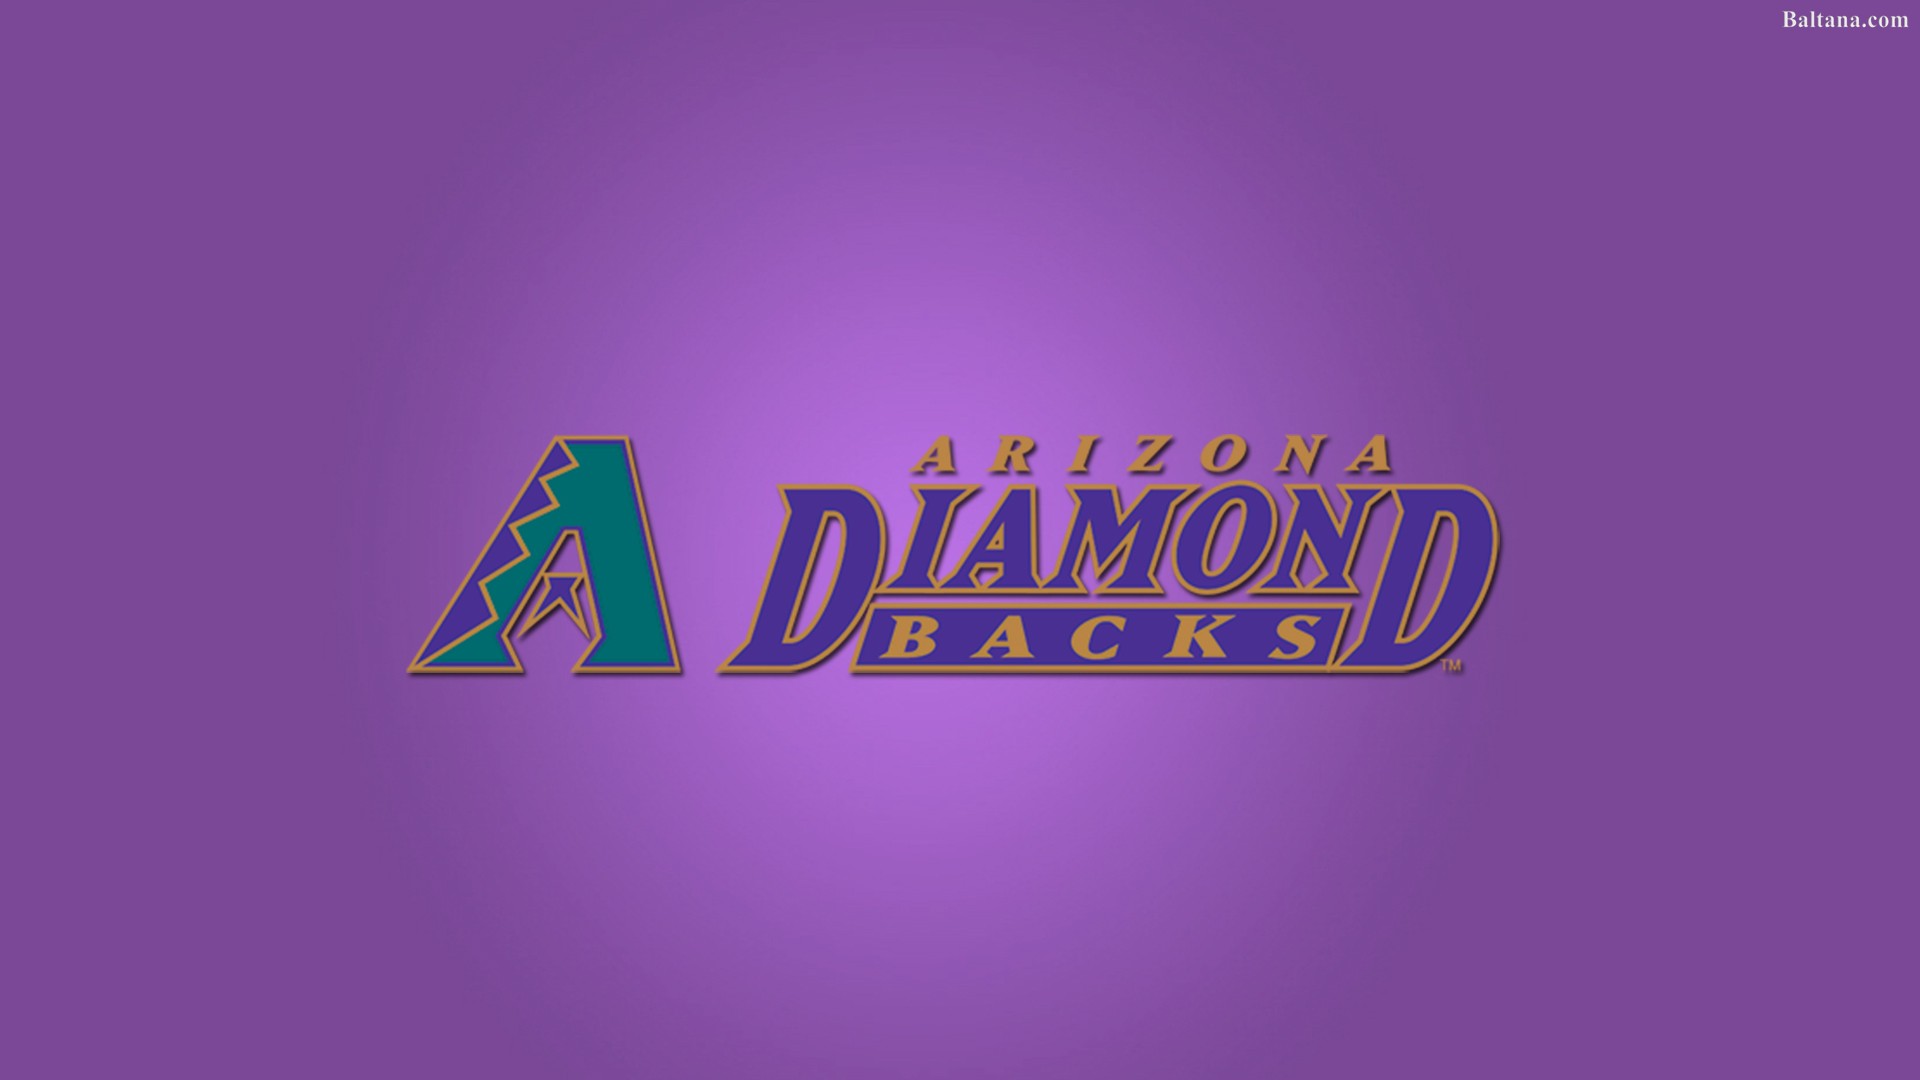 Arizona Diamondbacks HD Desktop Wallpaper Baltana